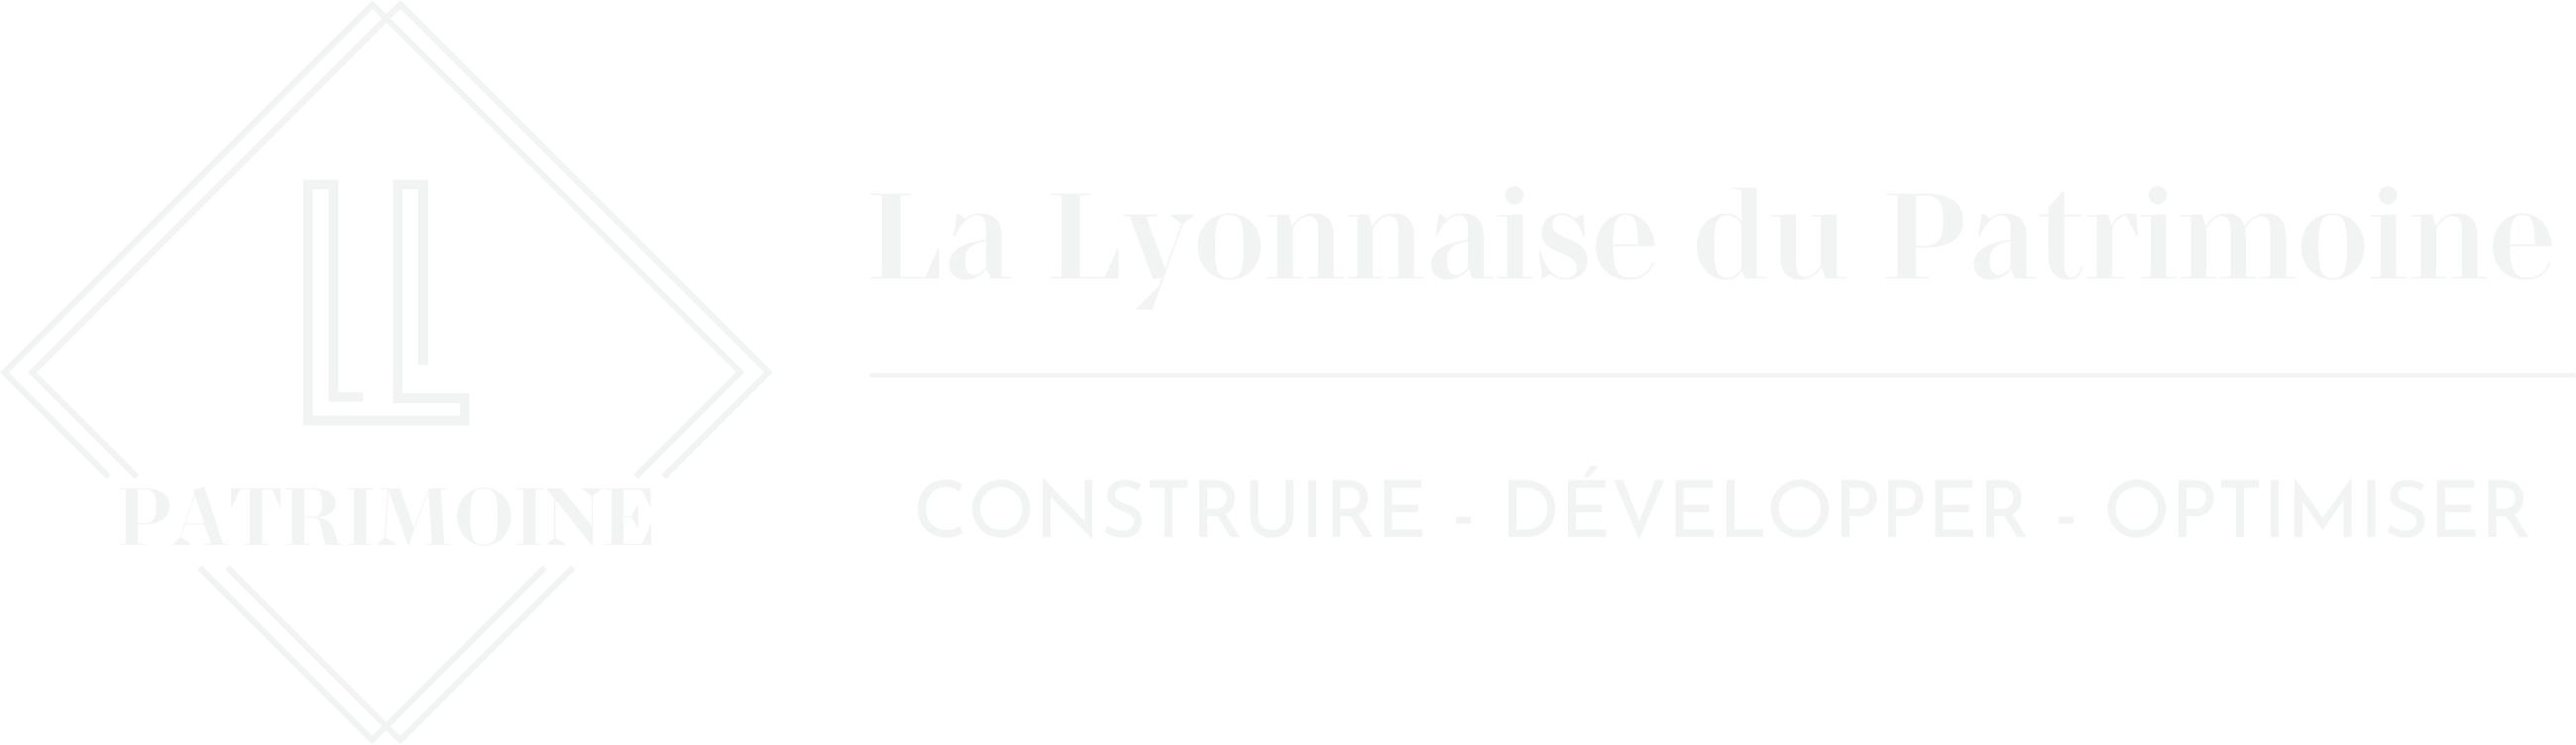 Logo La Lyonnaise du Patrimoine